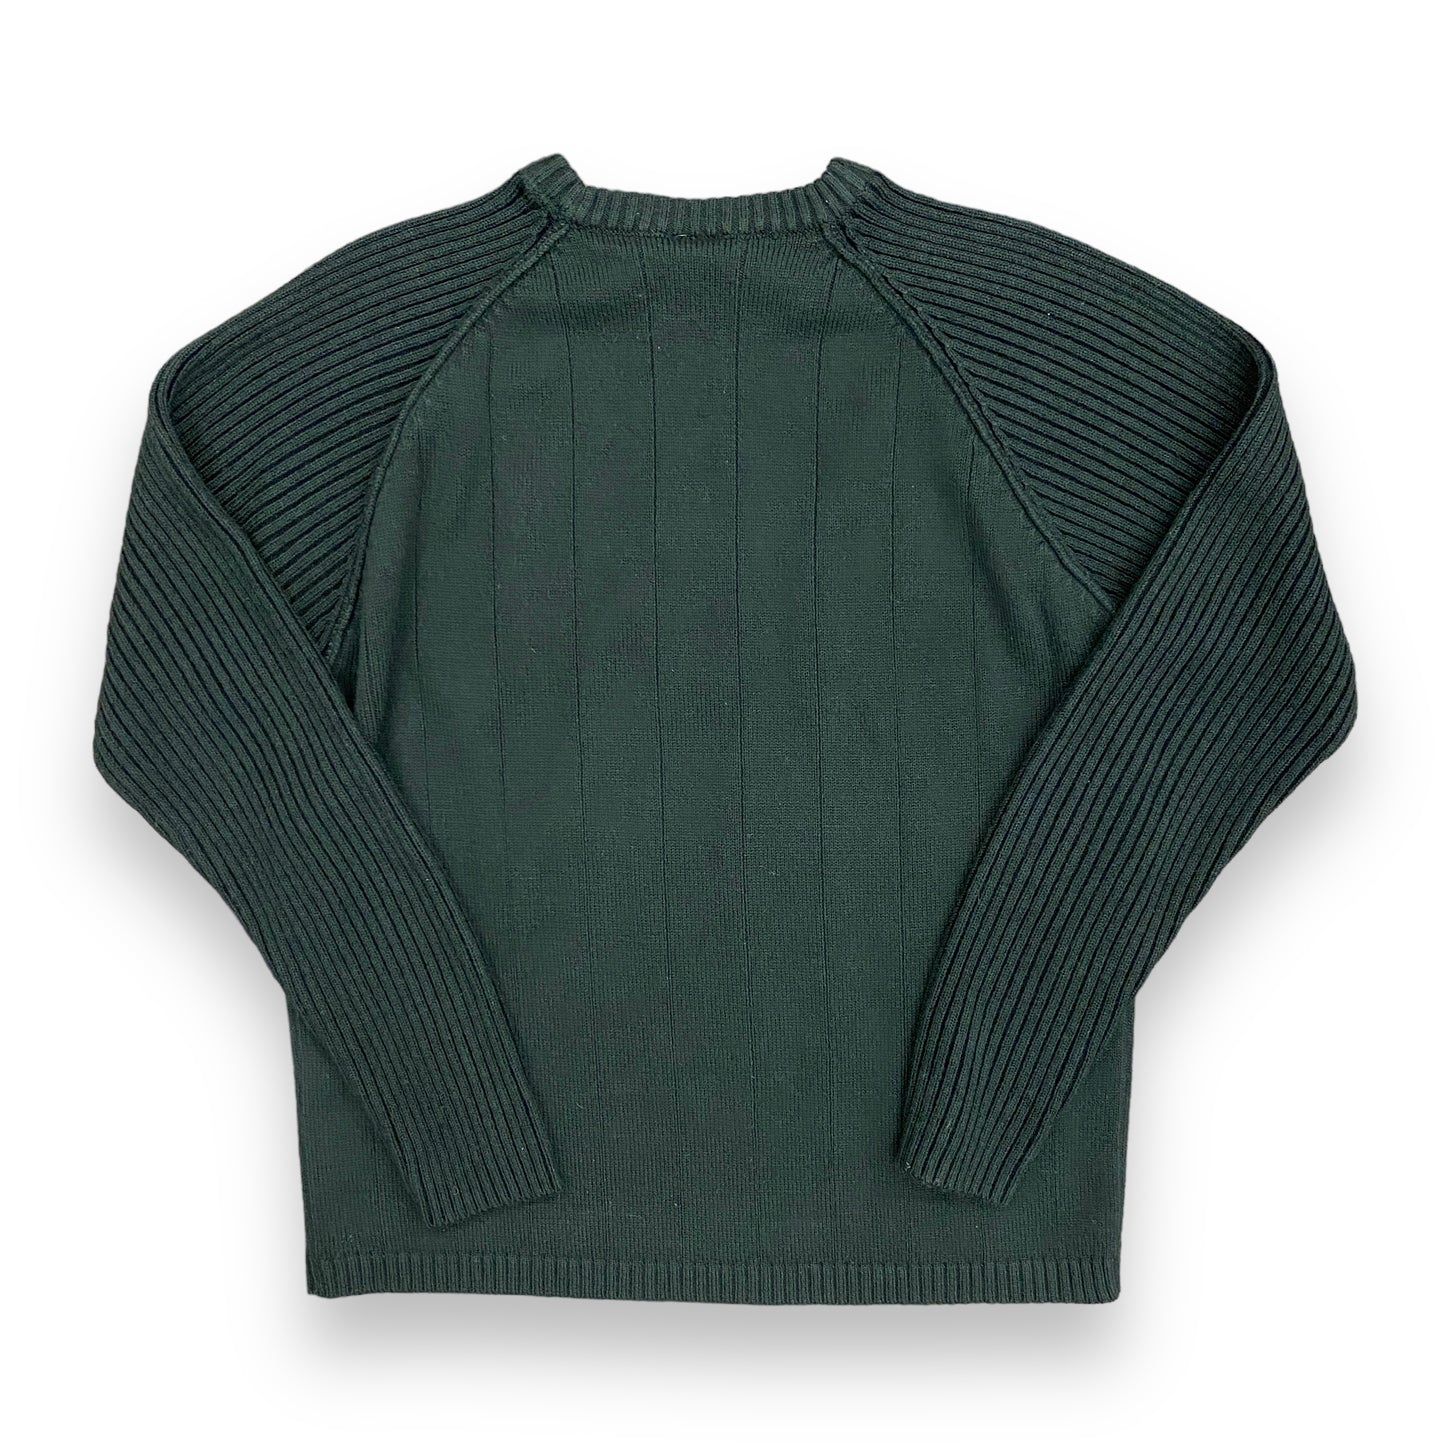 1990s Architect Jeans Raglan Knit Sweater - Size Large